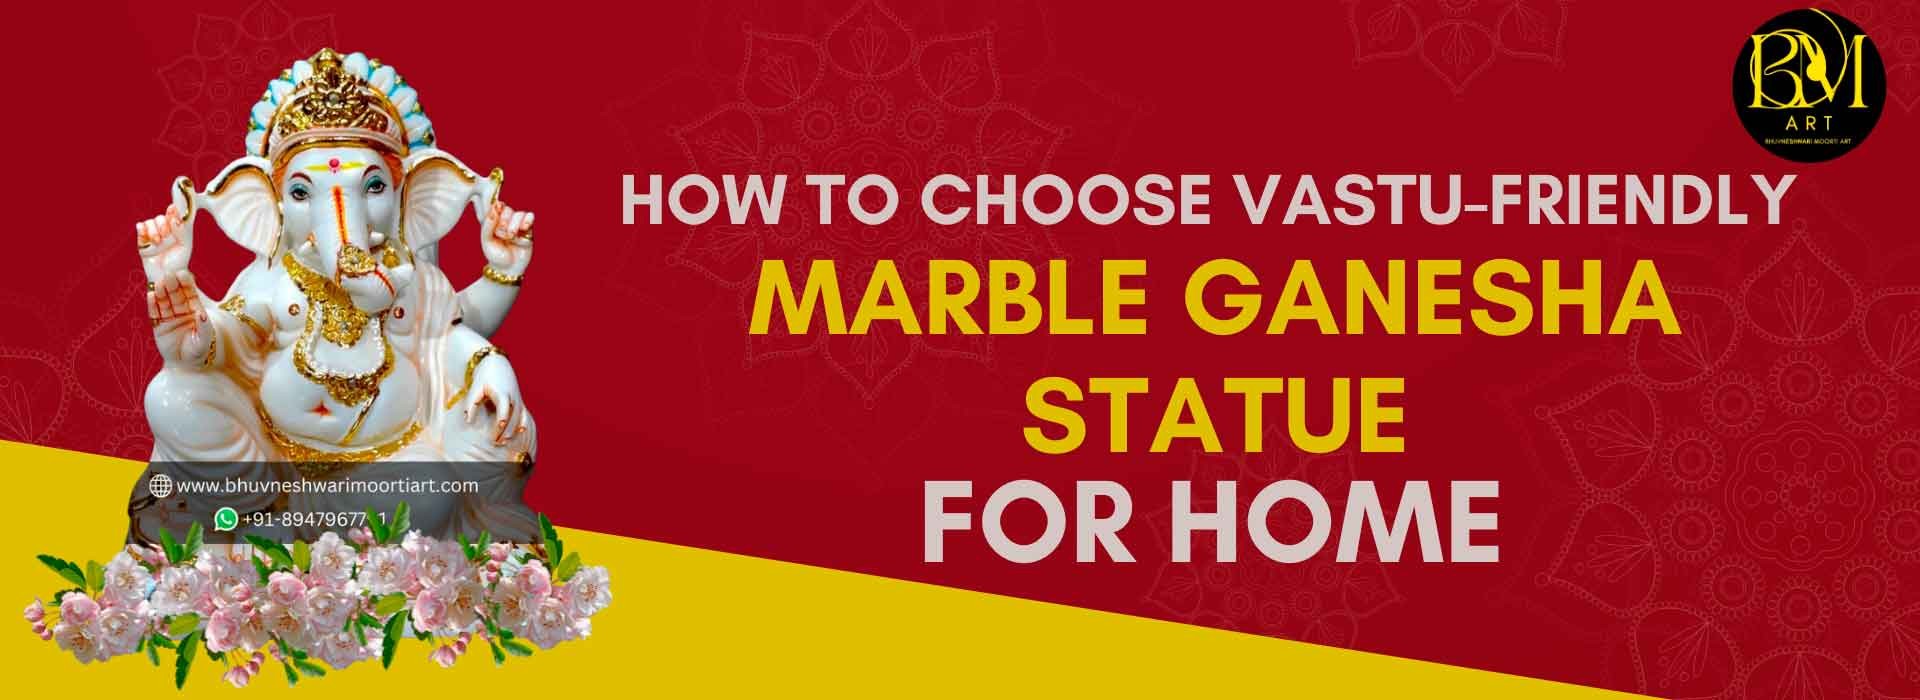 How to Choose Vastu-Friendly Marble Ganesha Statue for Home?